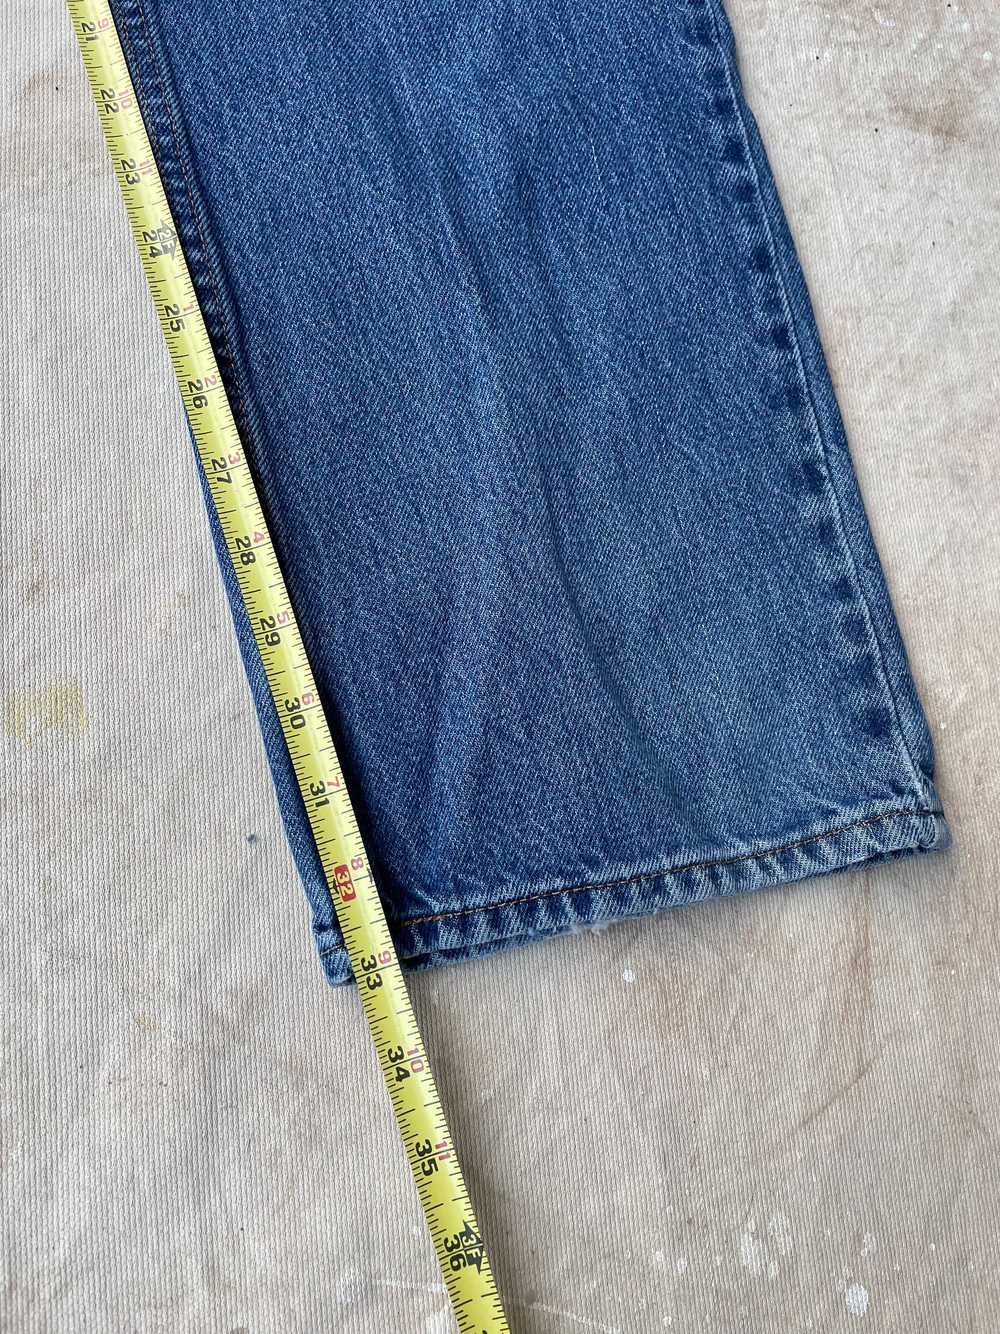 GAP Medium Wash Blue Jeans—[32x33] - image 6